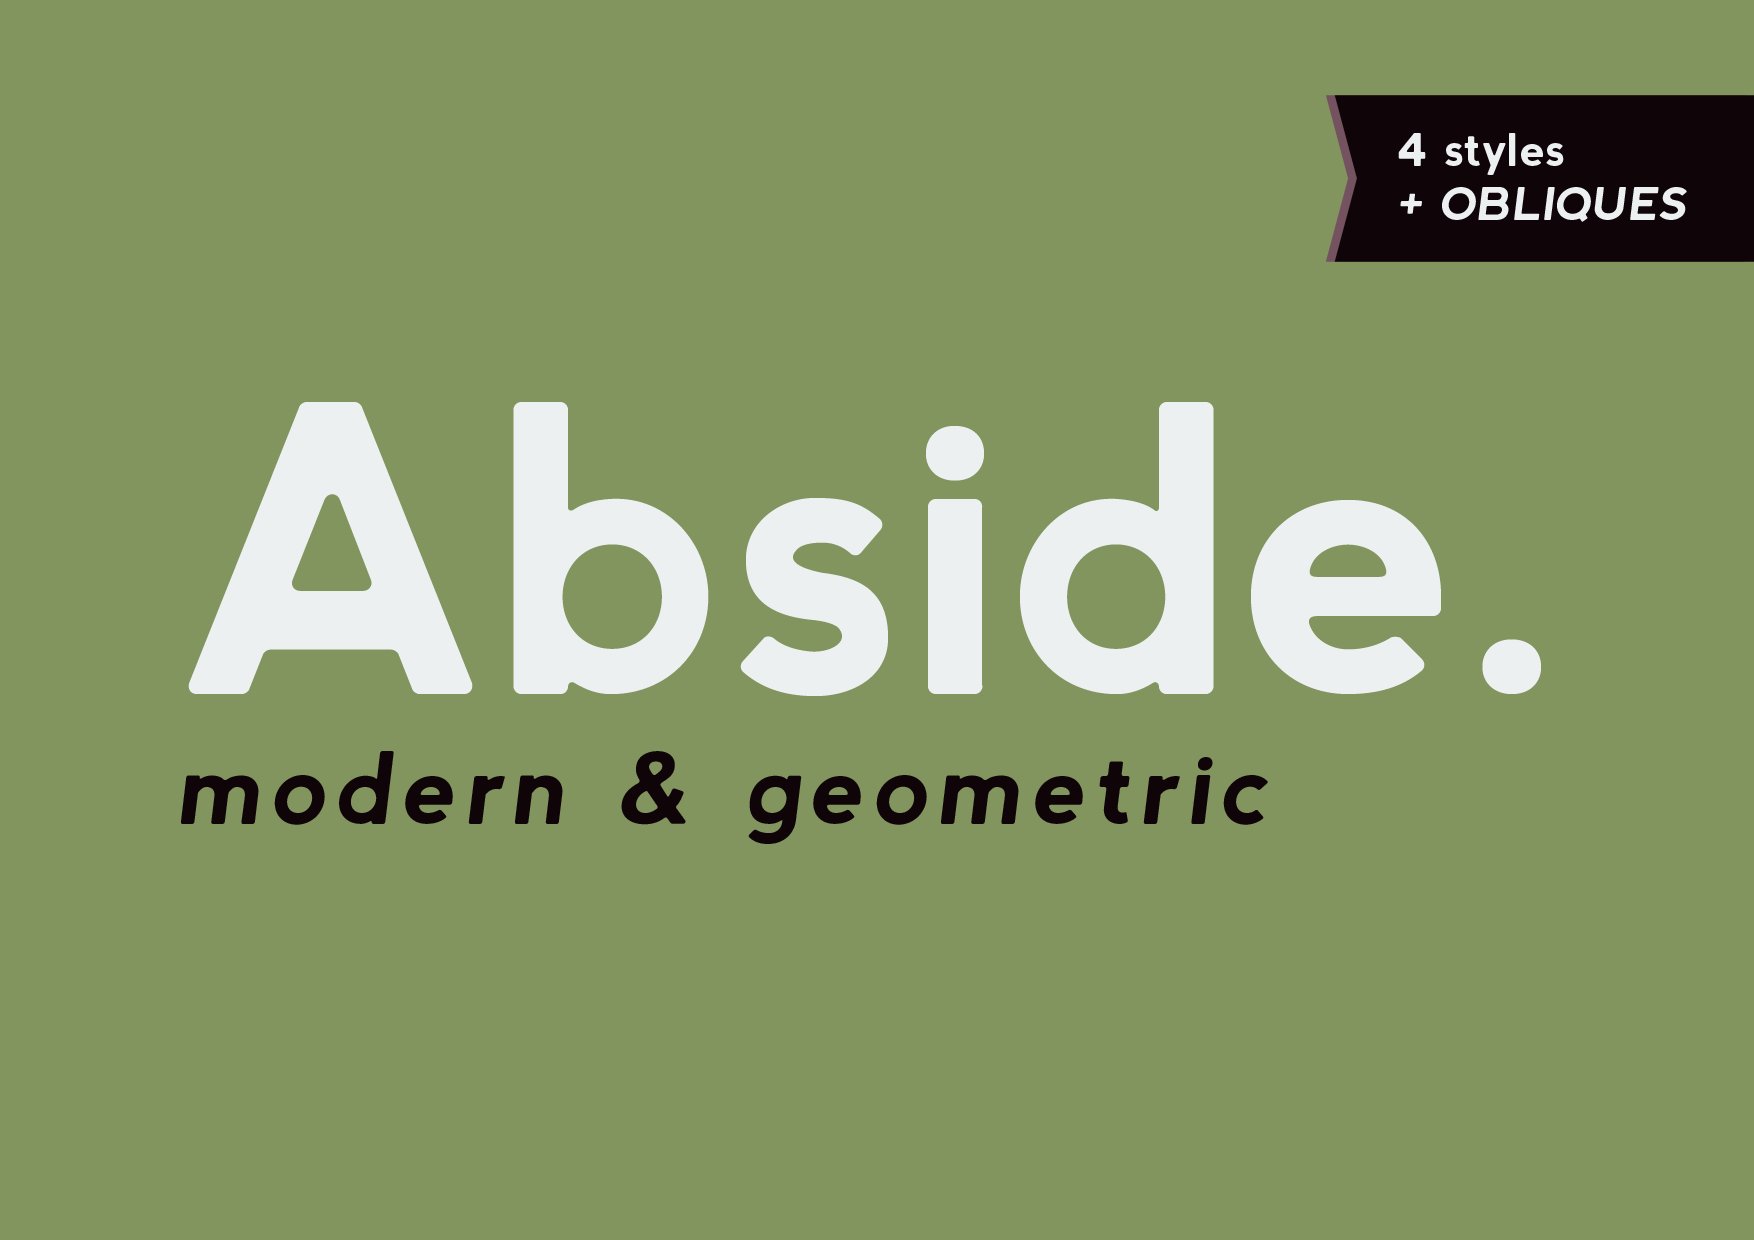 Abside Font (Modern & Geometric) cover image.